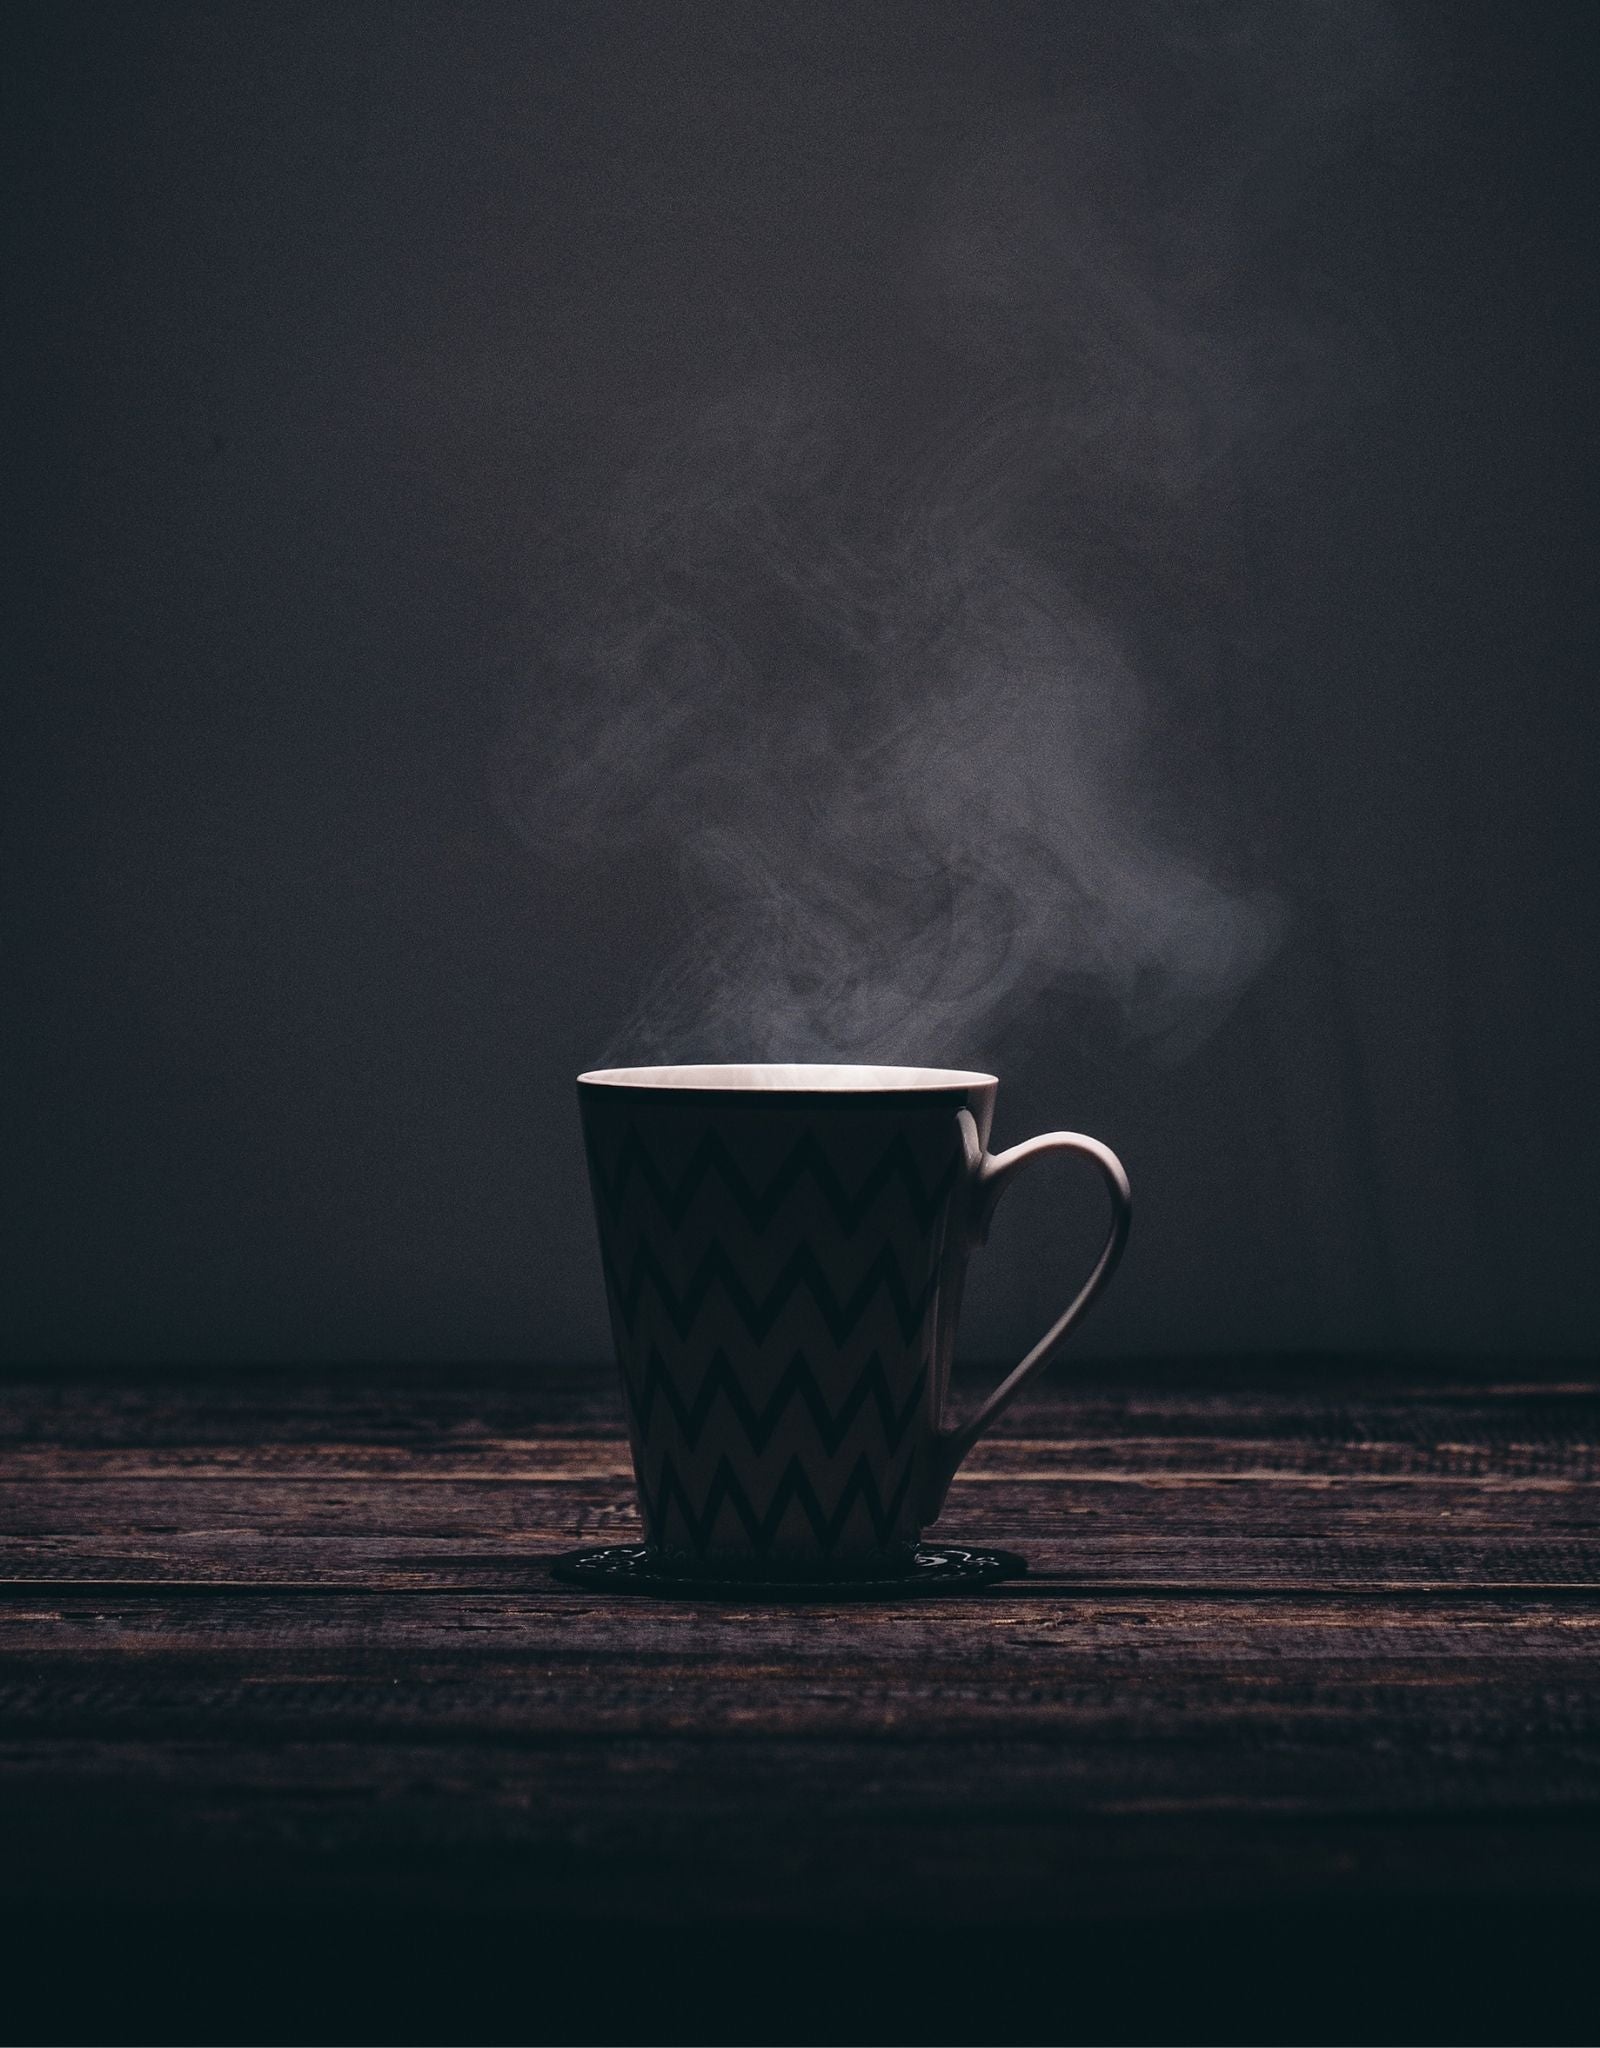 hot coffee in a mug on black background